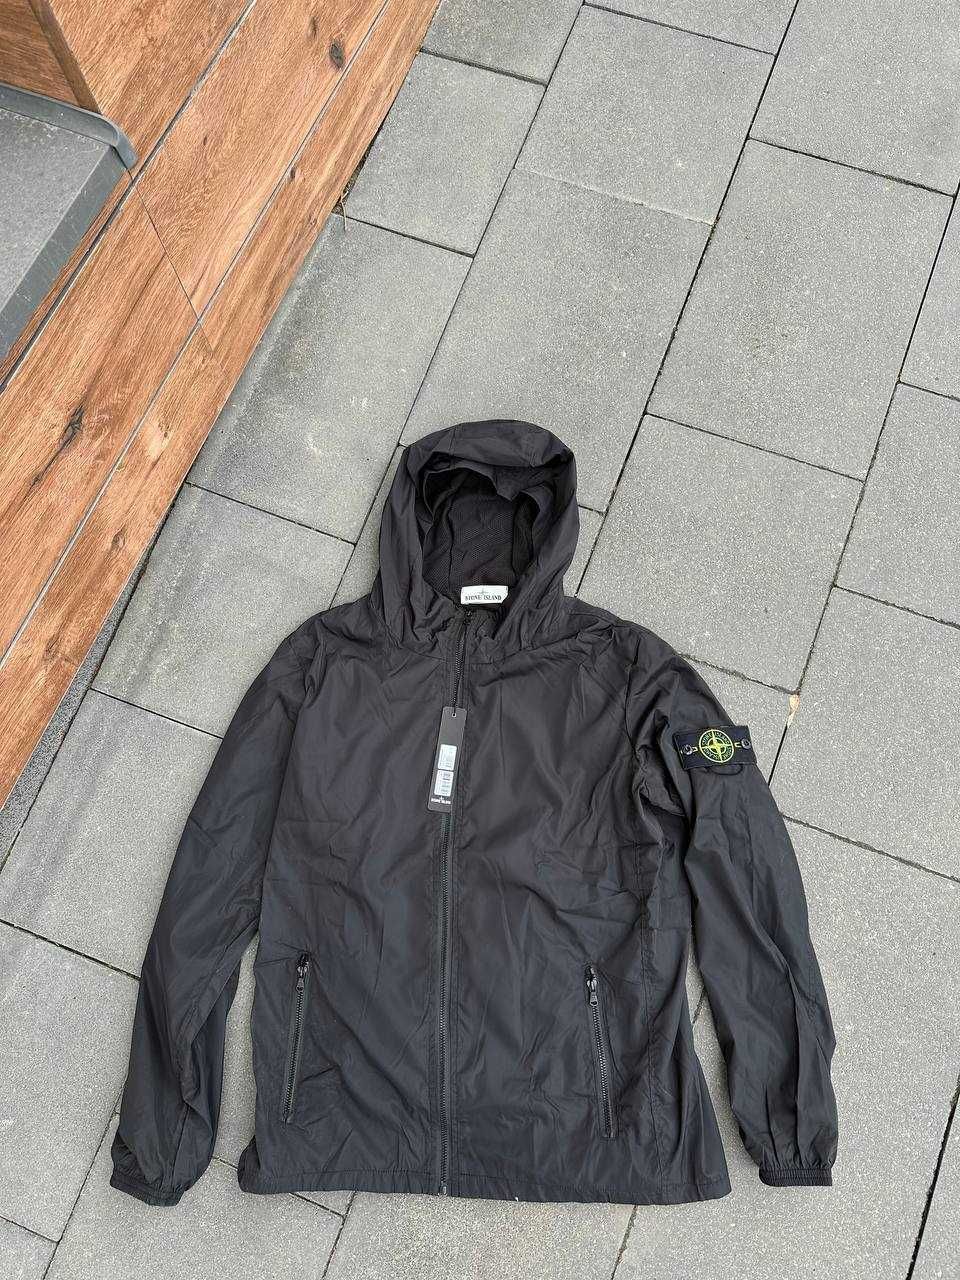 XS S M L XL XXL // Stone Island ветровка куртка черная